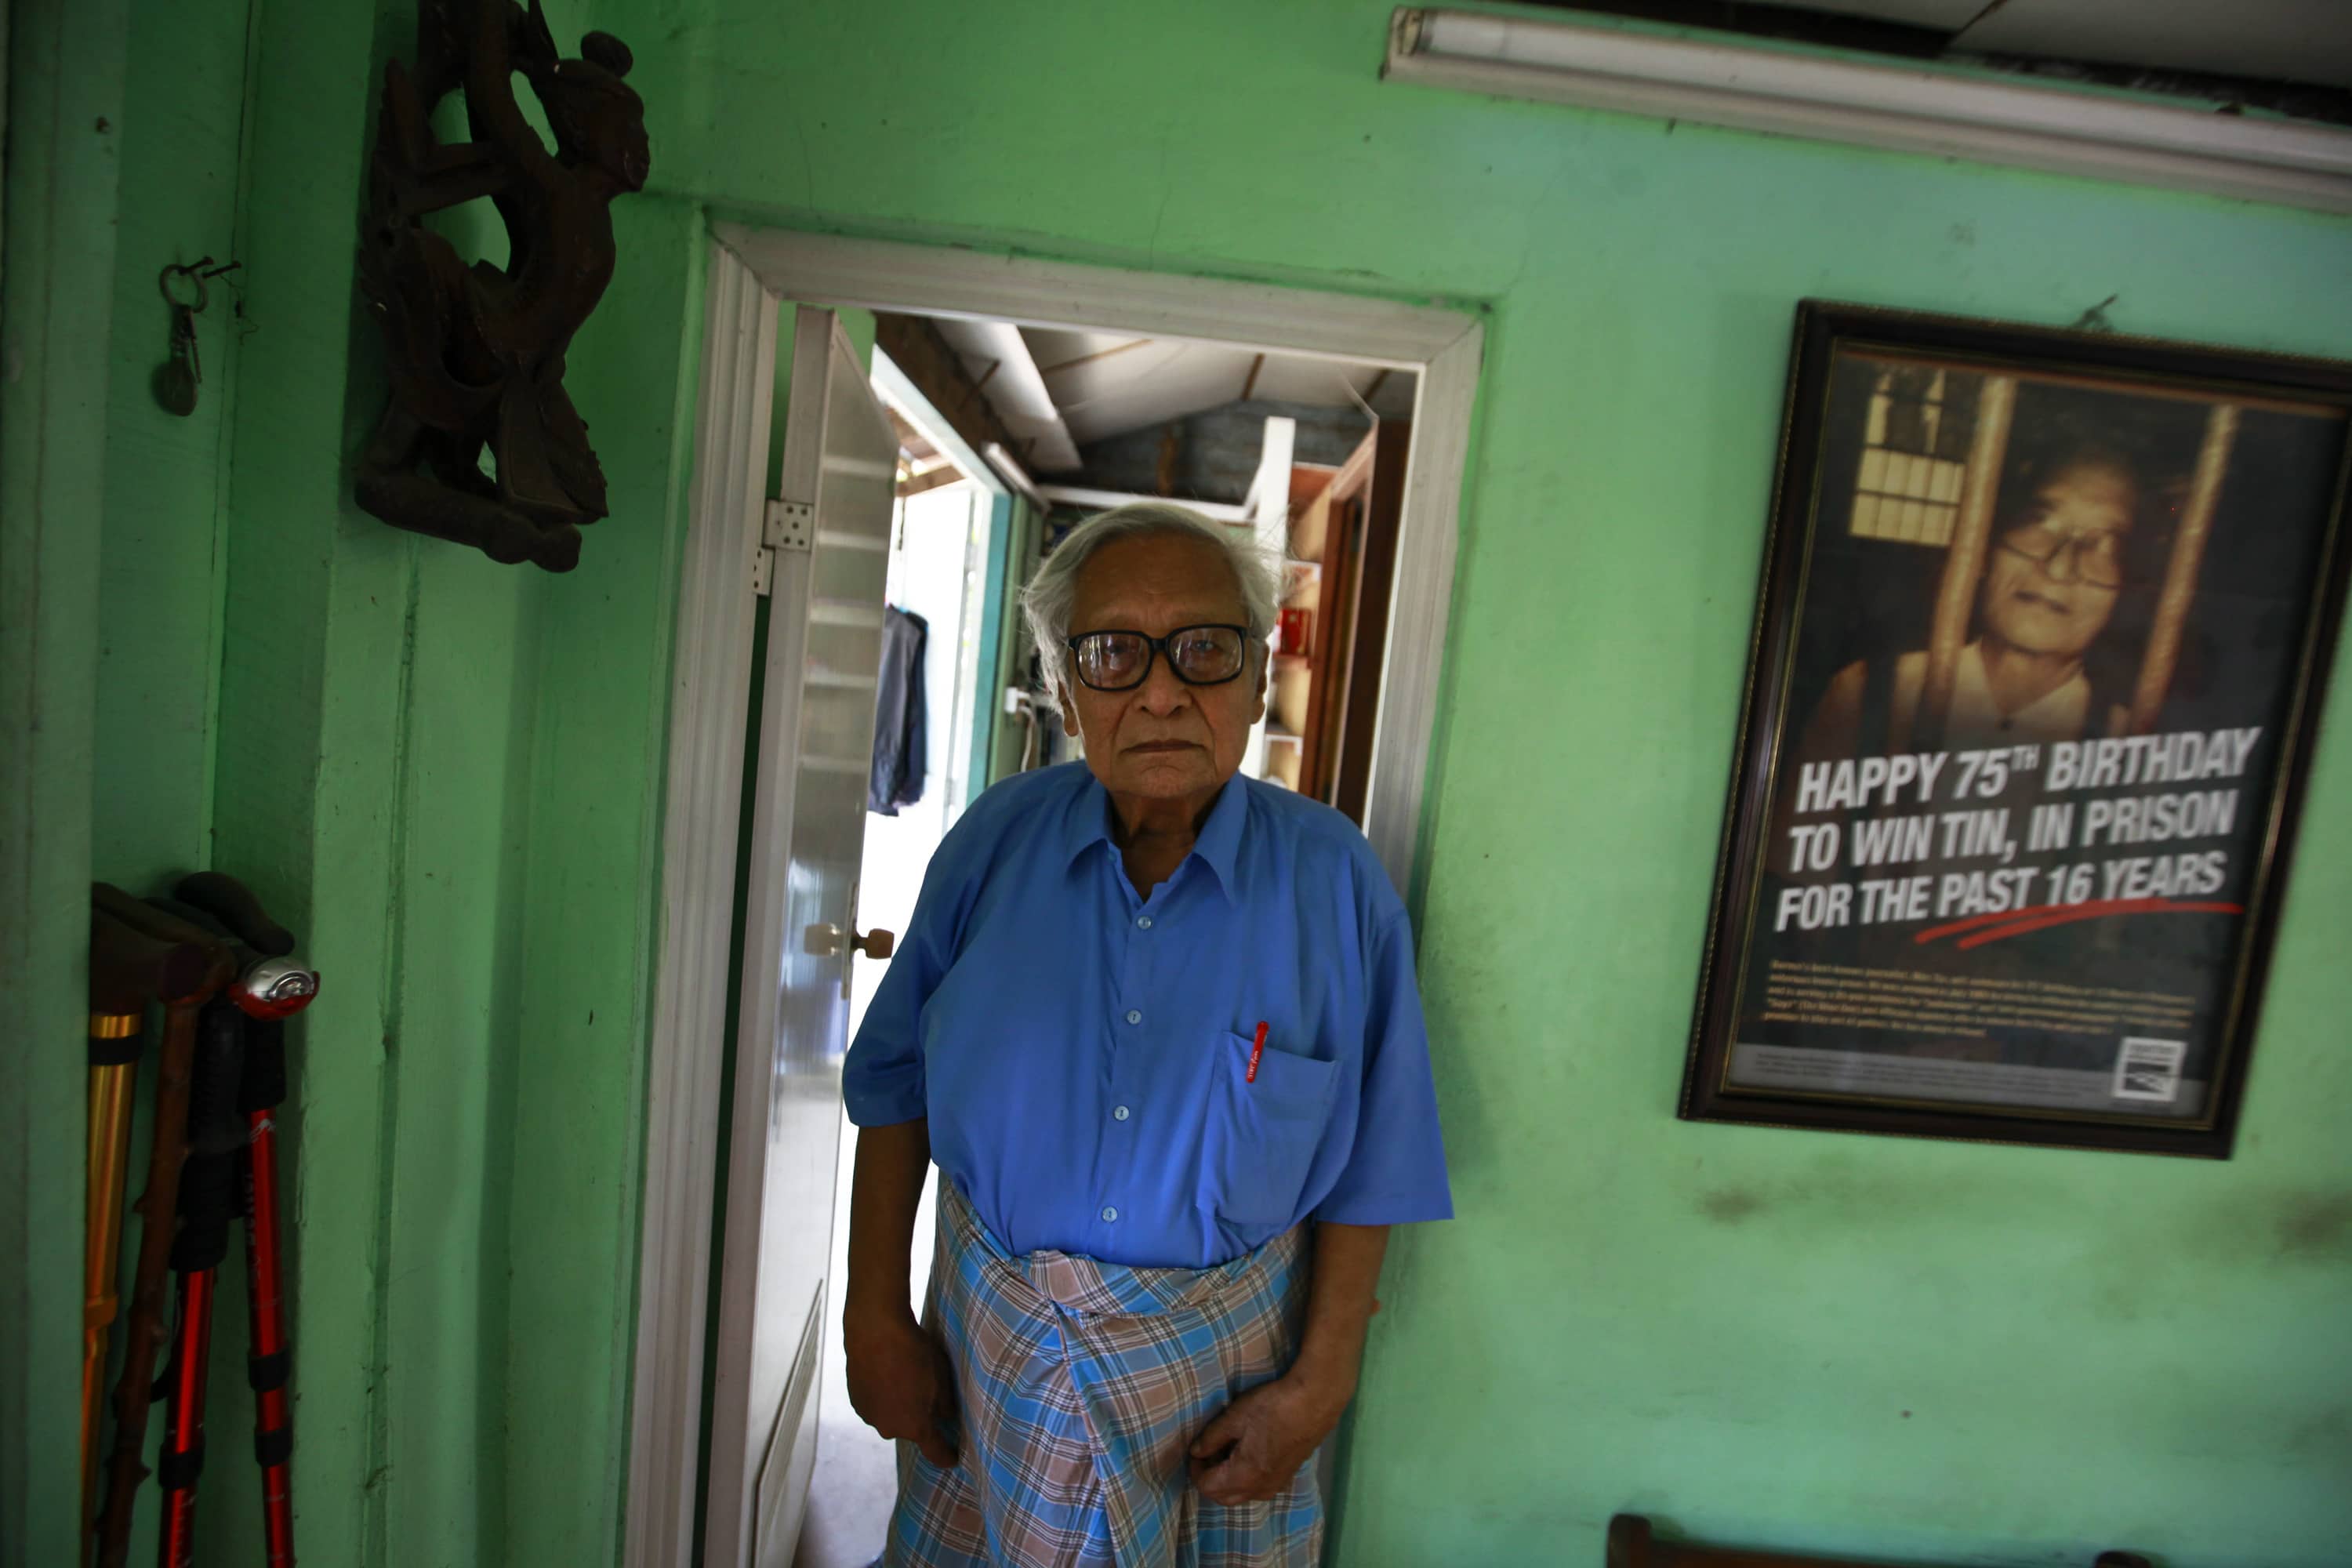 Win Tin poses in his prison issued shirt at his home in Yangon, 9 April 2013, REUTERS/Soe Zeya Tun